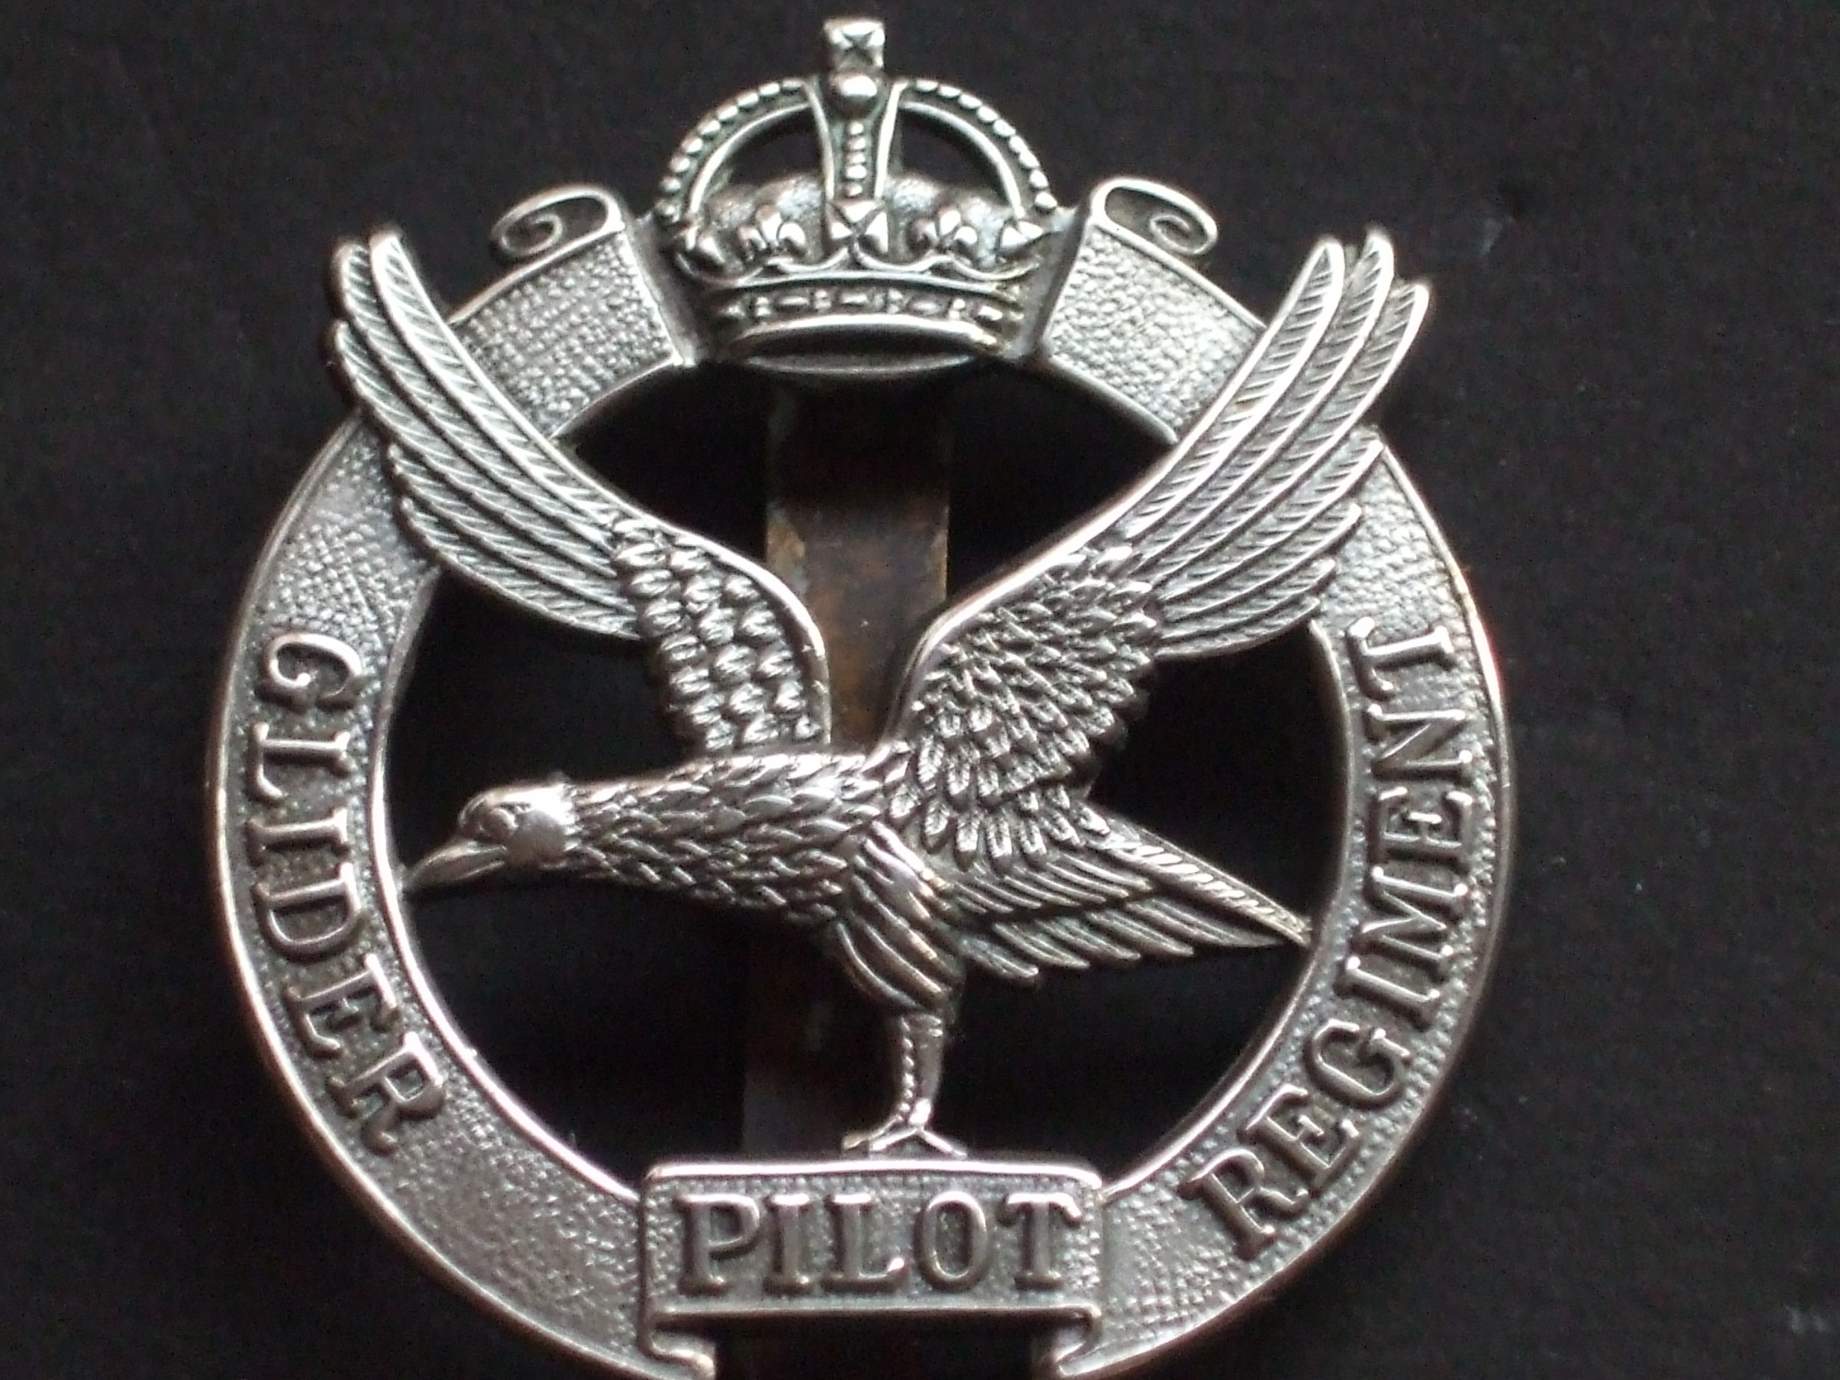 Opinion on British Glider Pilot badge